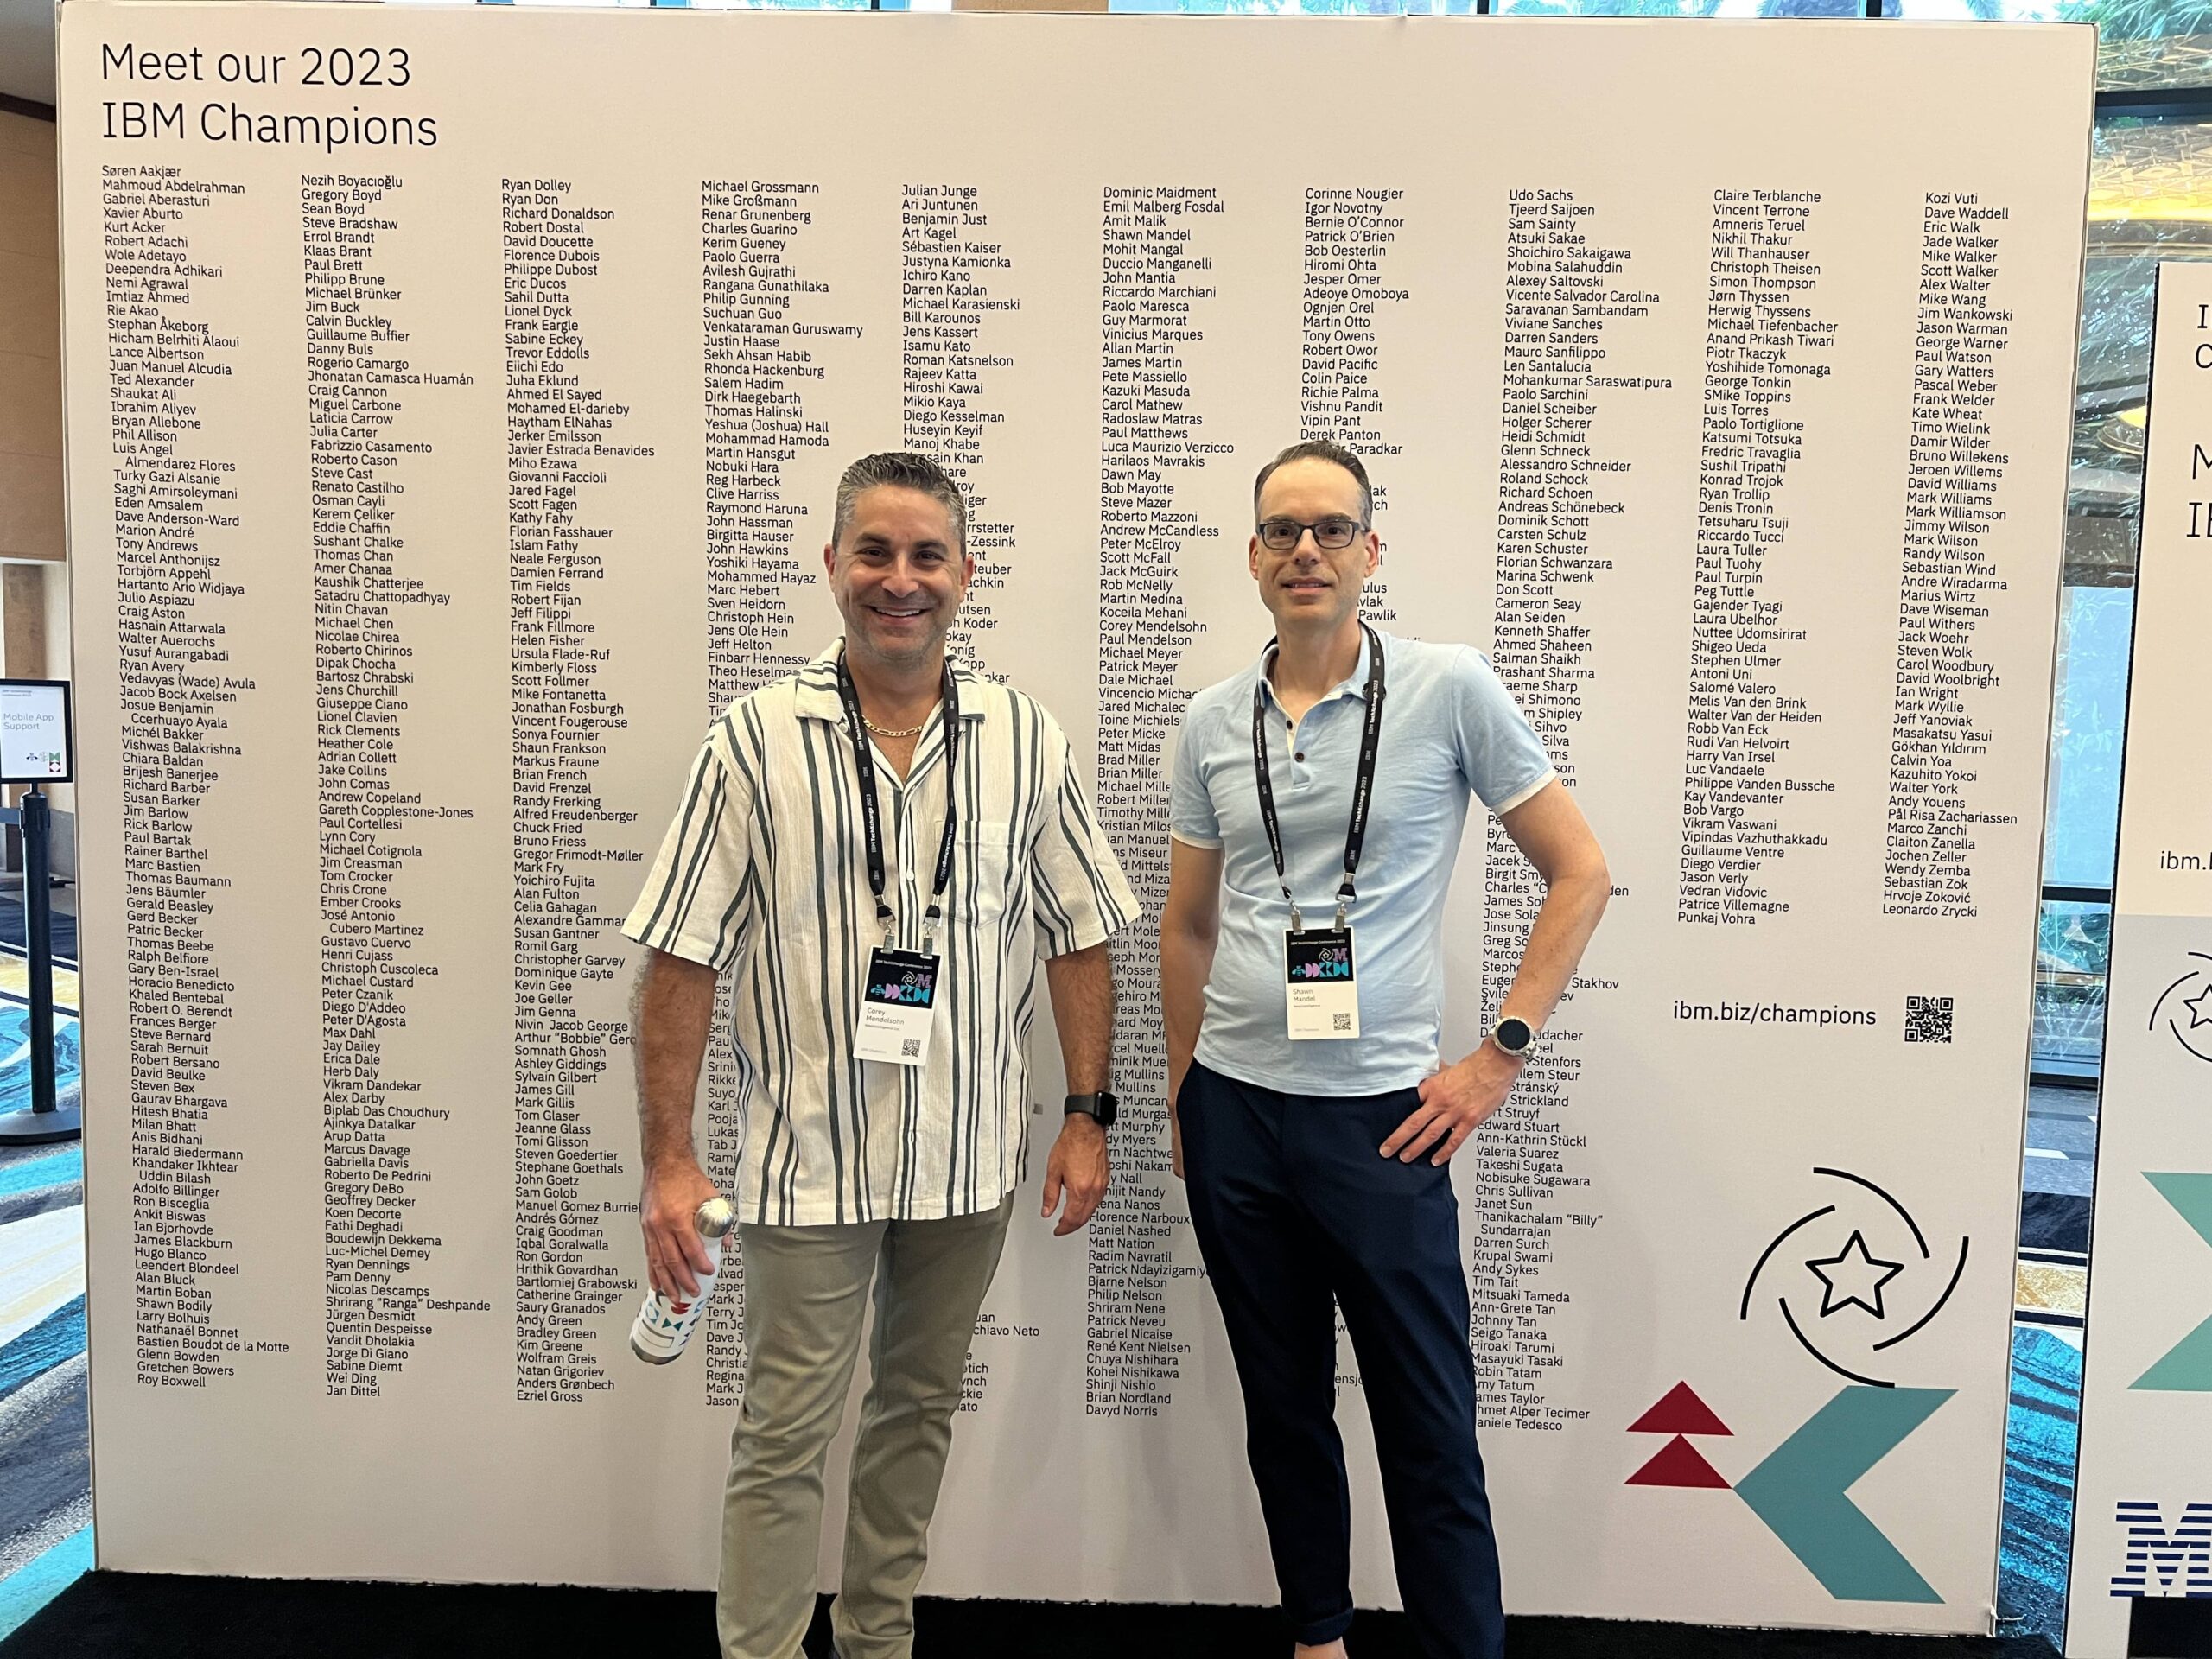 IBM Champions - Corey Mendelsohn & Shawn Mandel of NewIntelligence at the IBM TechXchange 2023